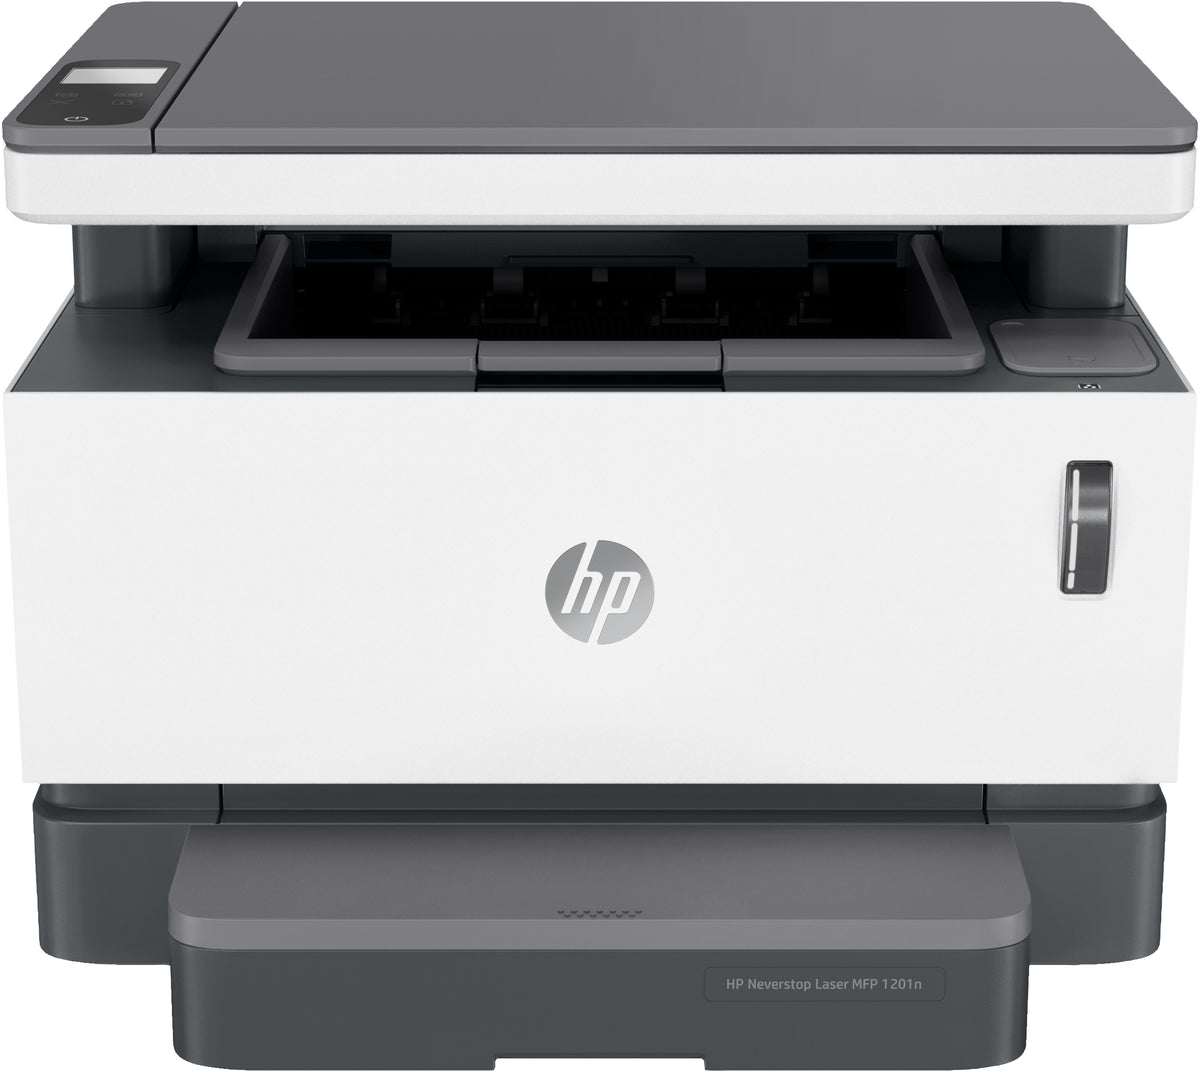 HP Neverstop Laser MFP 1201n - Impresora multifunción - B/N - láser - 216 x 356 mm (original) - Legal (soportes) - hasta 14 ppm (copia) - hasta 20 ppm (impresión) - 150 hojas - USB 2.0, LAN